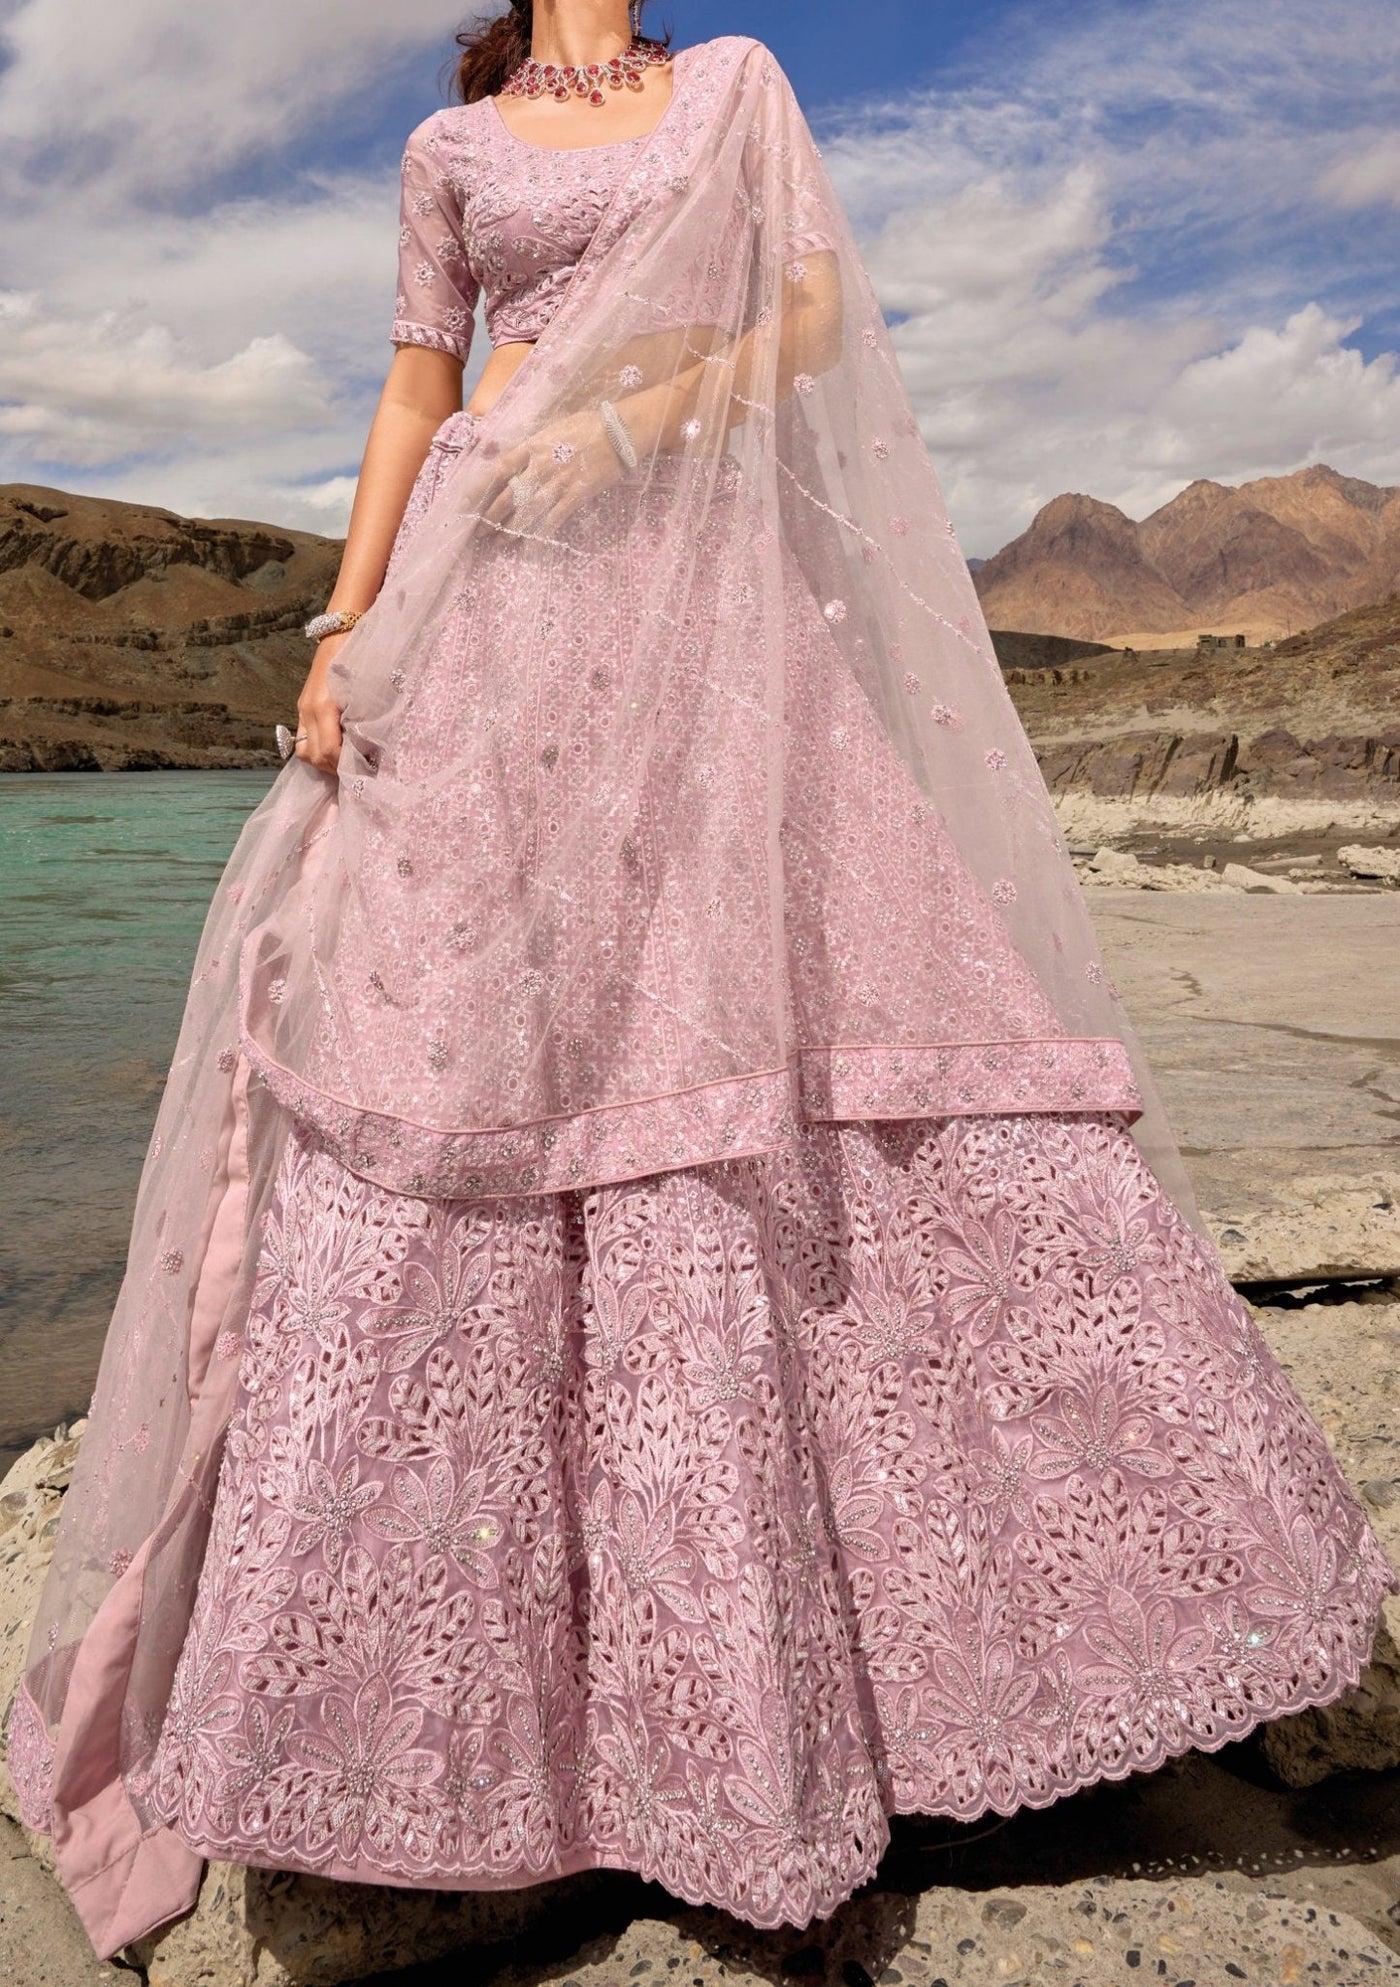 San Diego Sunset-Gopi skirt Lehenga – Radha Govinda's Fashions - Gopi Skirt  Outfits